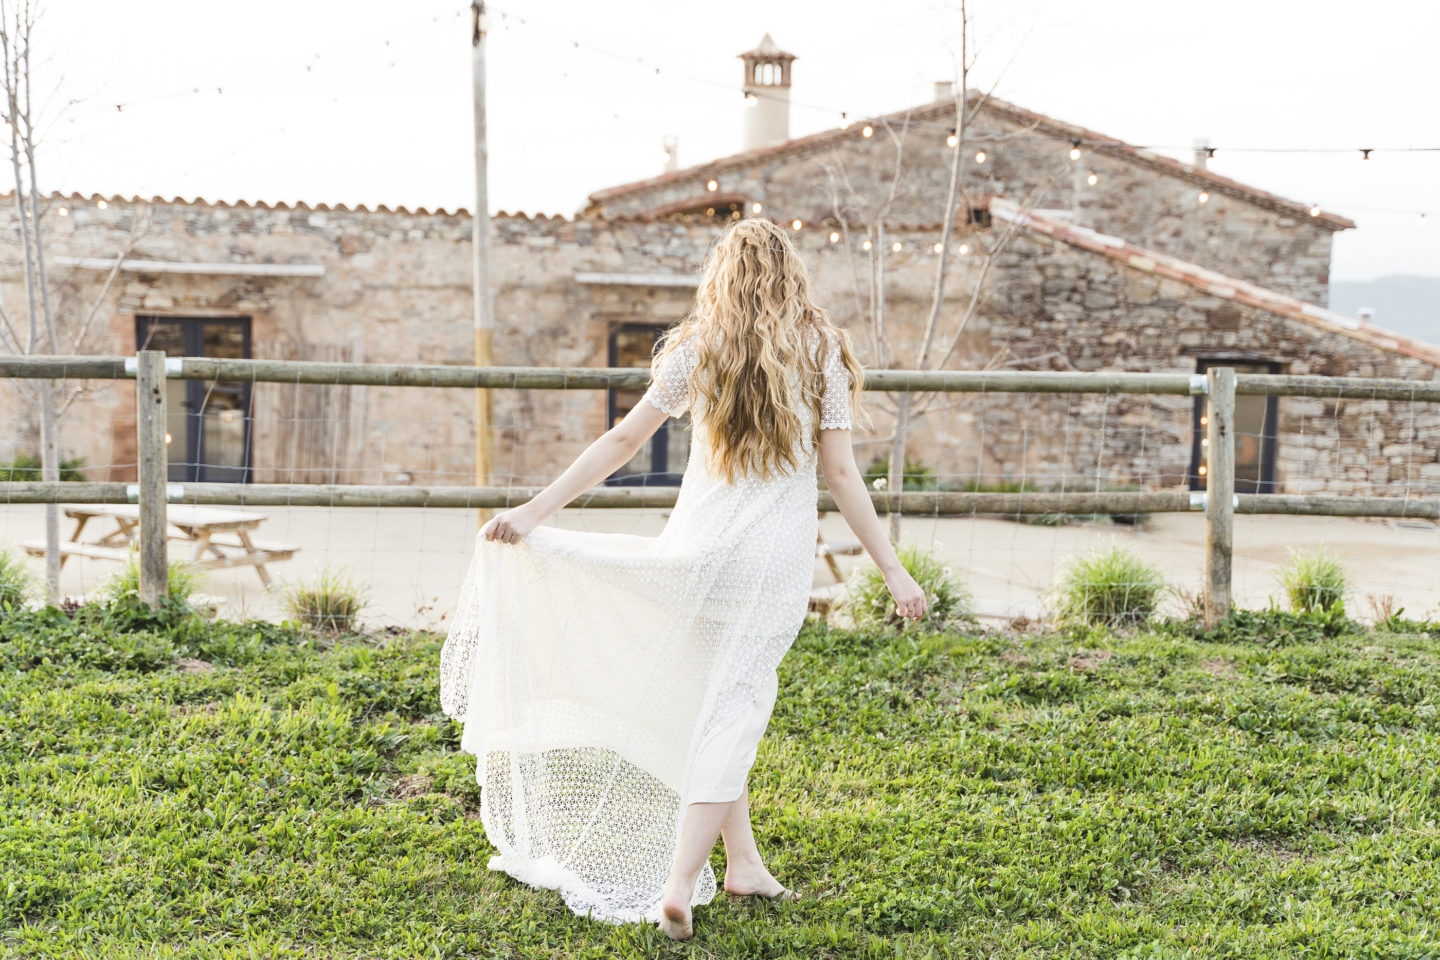 Ethical Wedding Inspiration With Sandra Jorda Dress In Barcelona, Spain